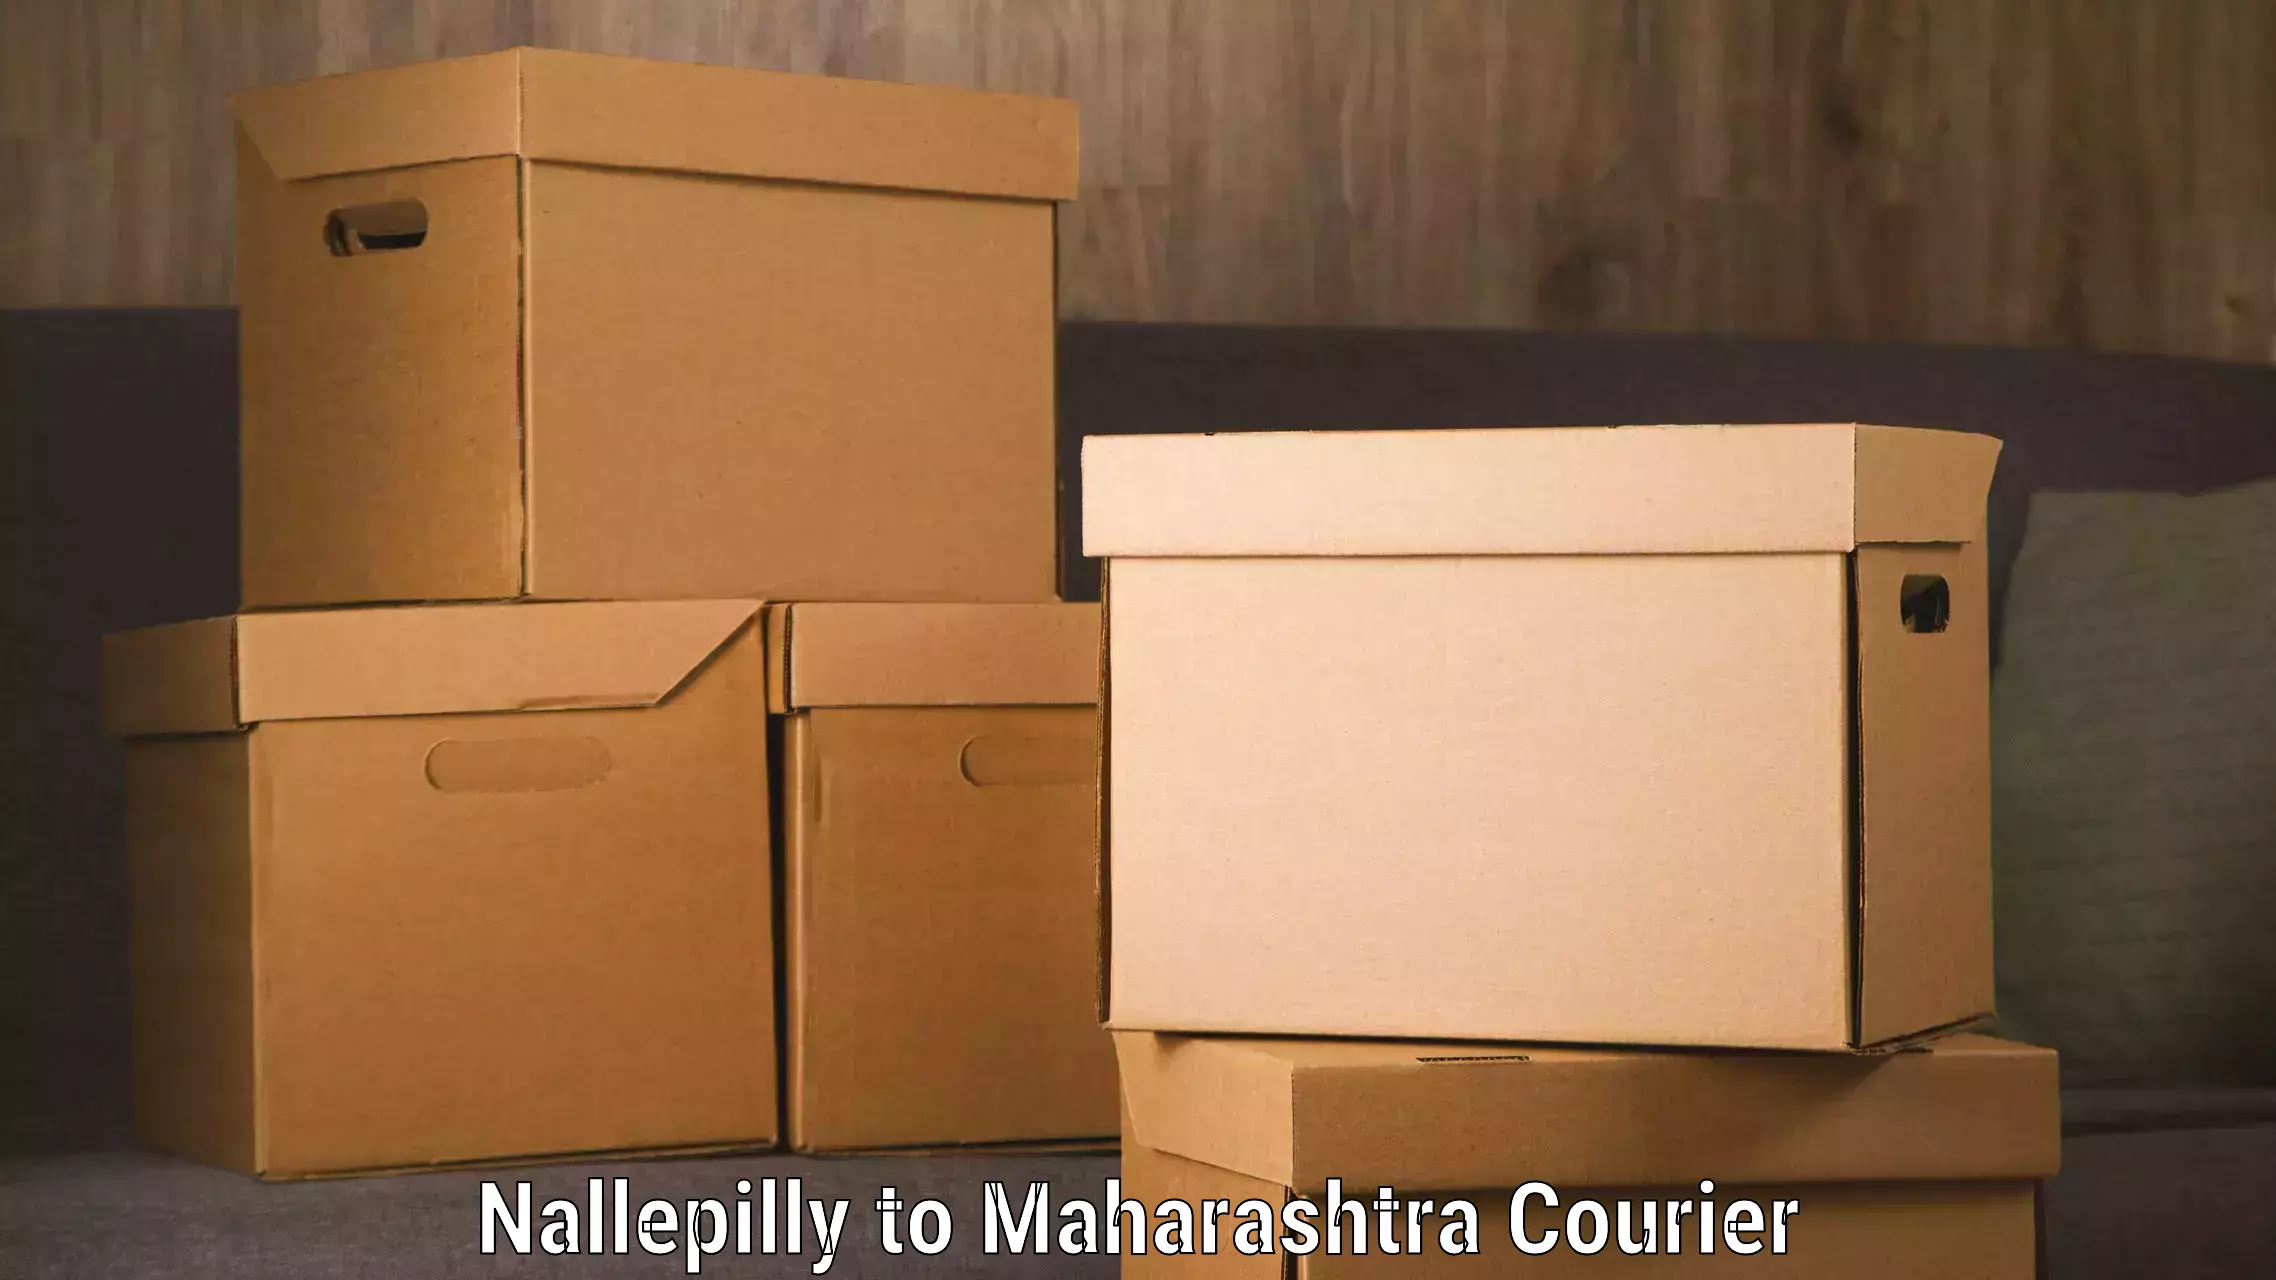 International courier networks Nallepilly to Maharashtra